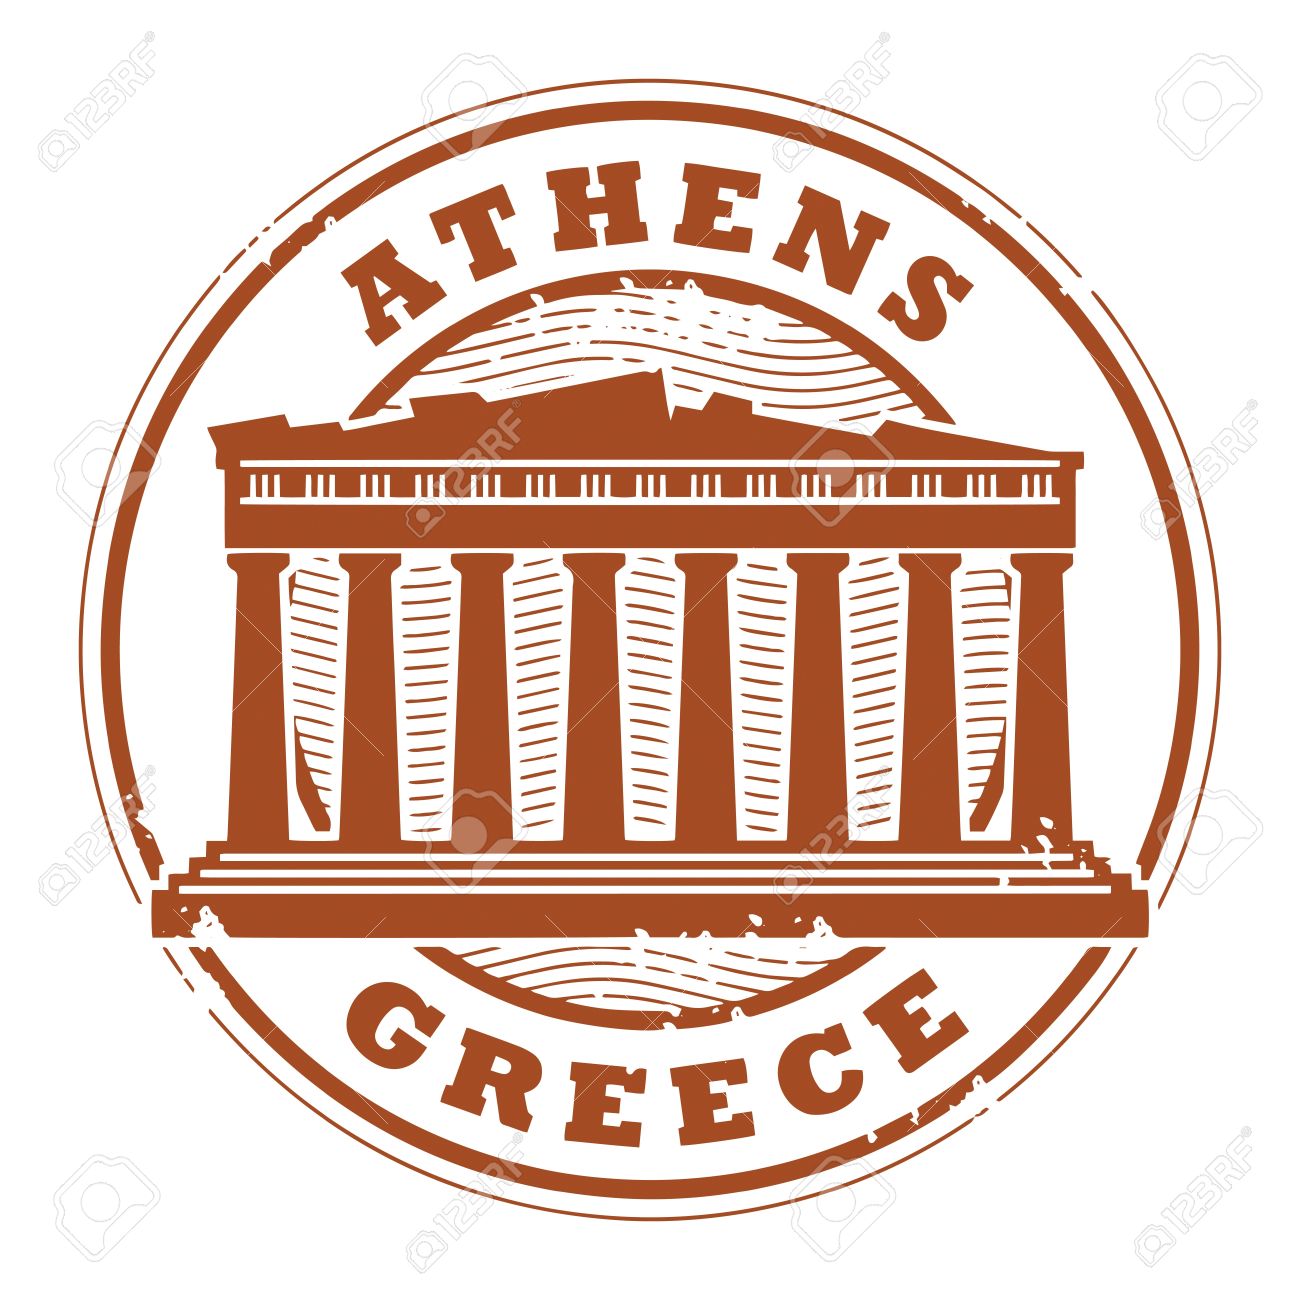 Athens Greece Clipart.